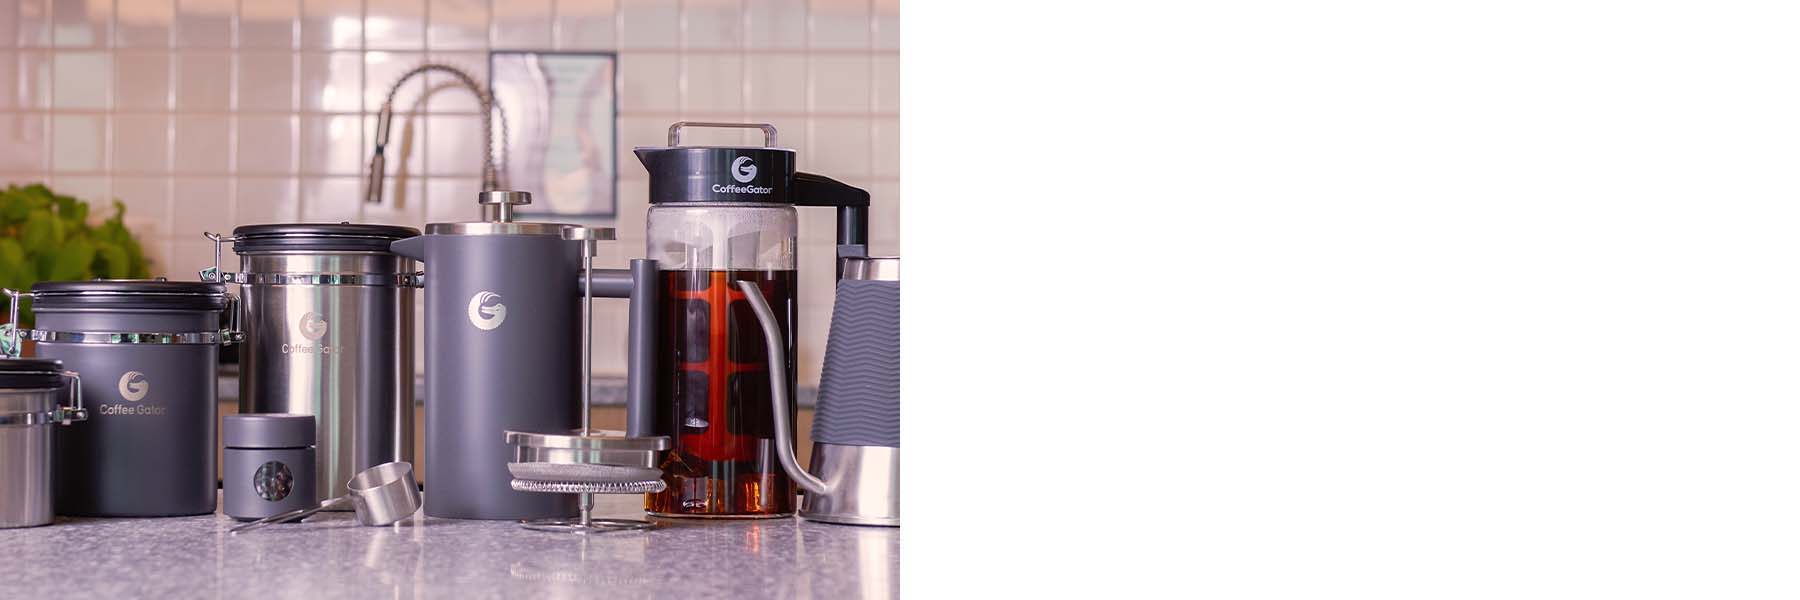 Coffee Gator coffee brewing equipment